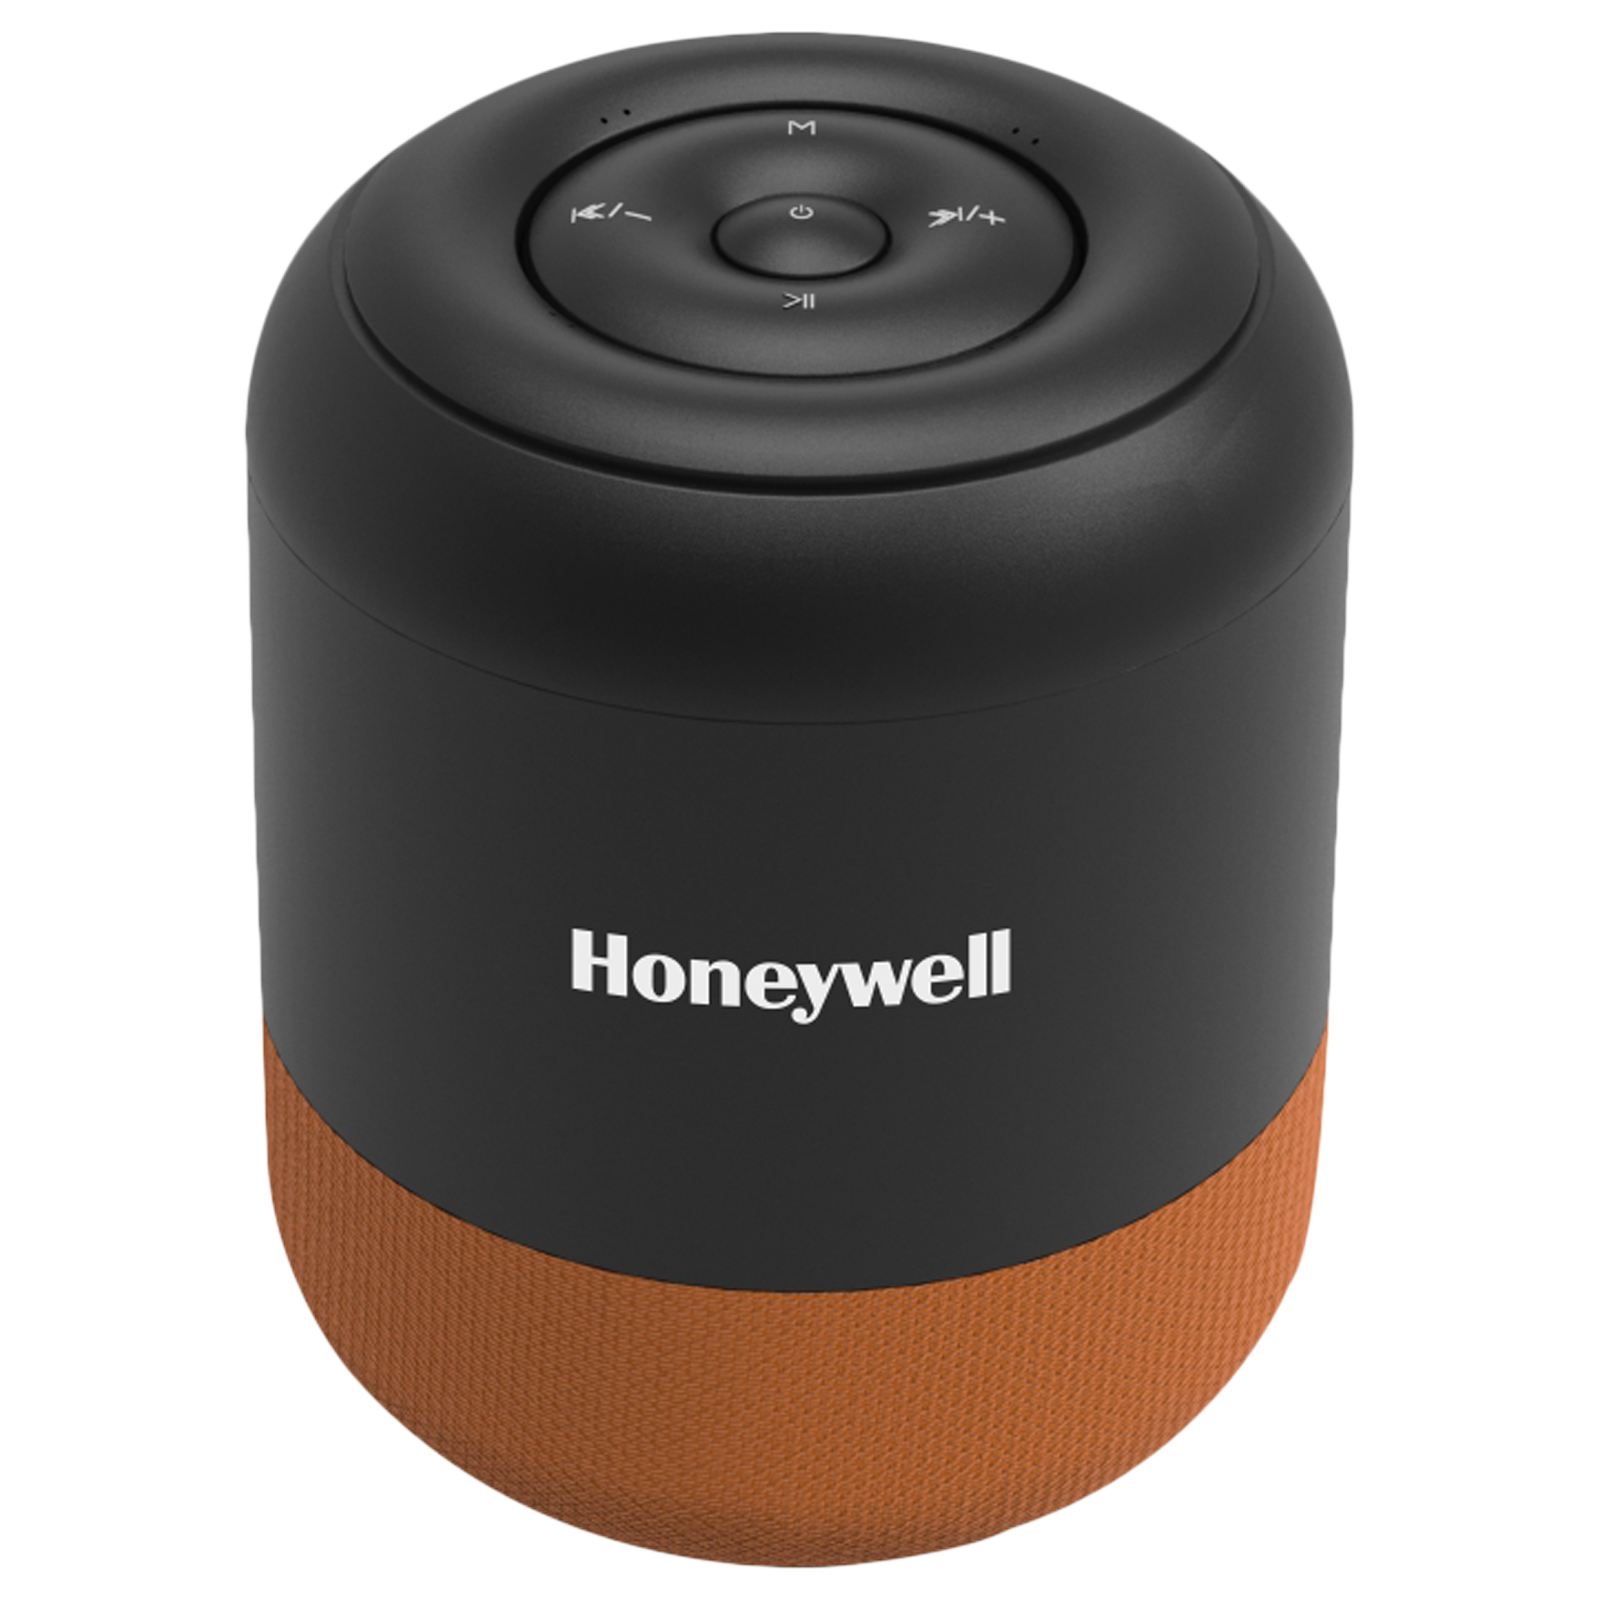 

Honeywell Moxie V200 5W Portable Bluetooth Speaker (IPX4 Water Resistant, Stereo Sound, 2.1 Channel, Orange)